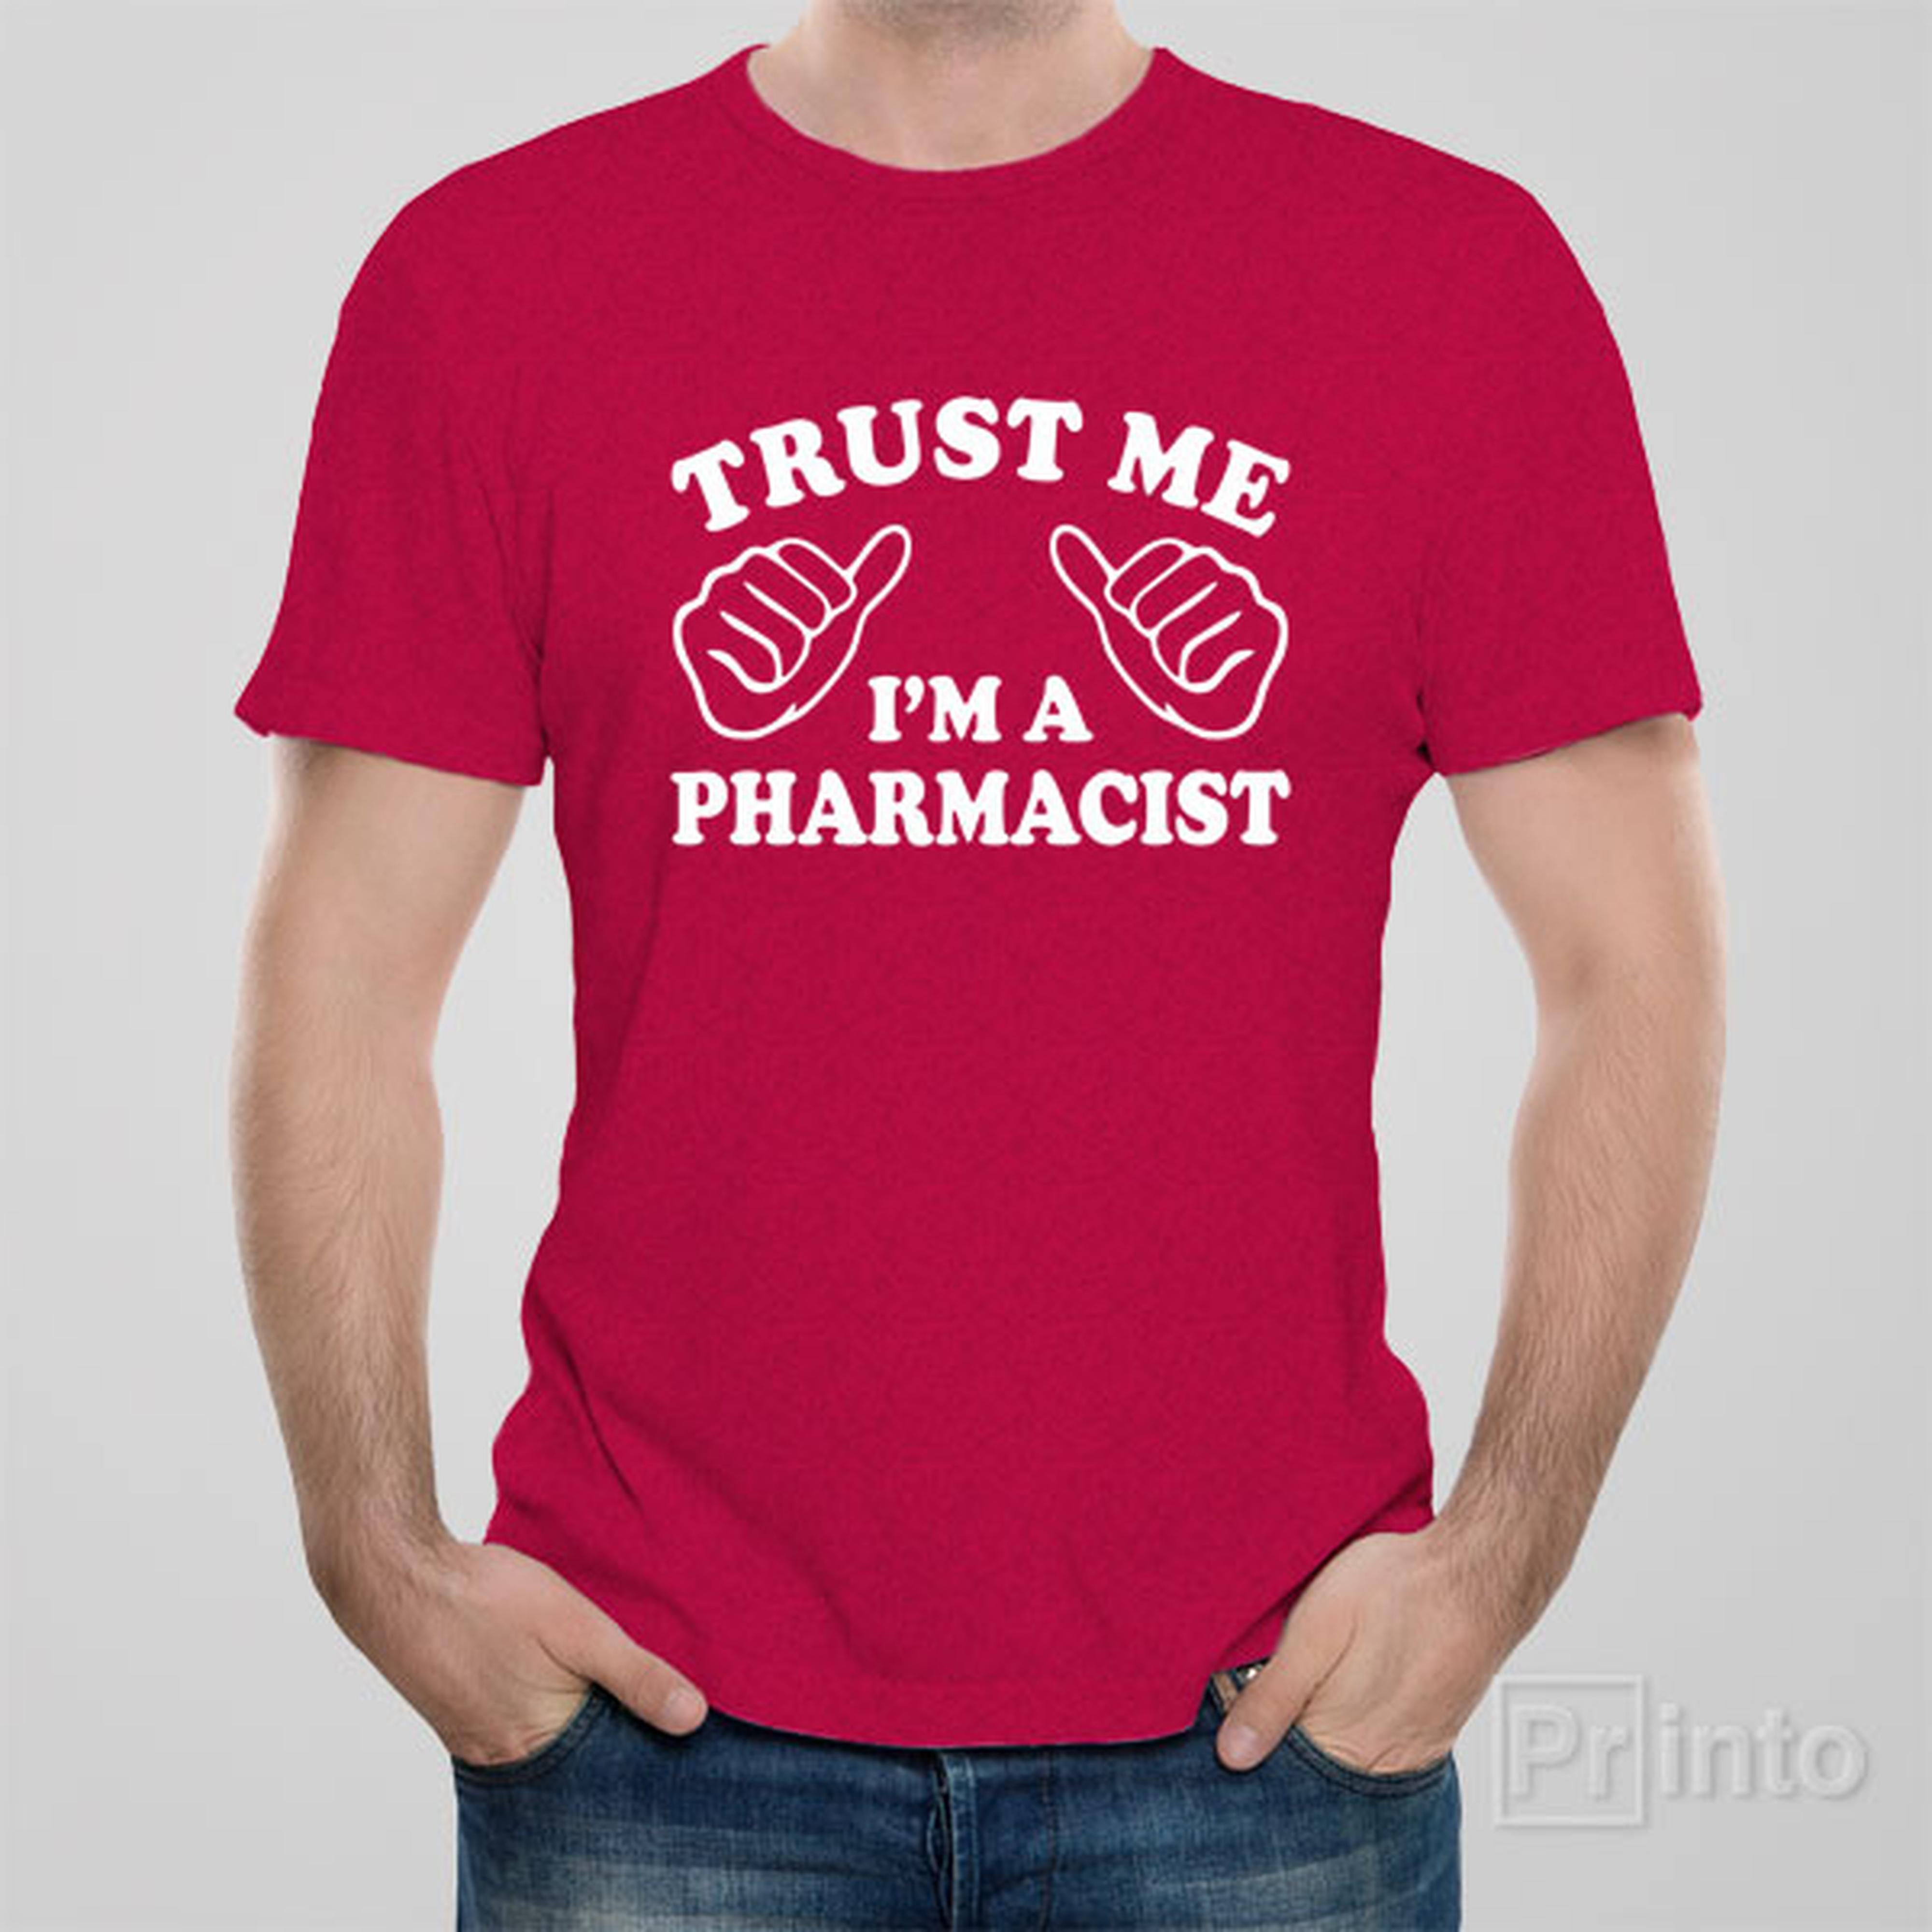 trust-me-i-am-a-pharmacist-t-shirt